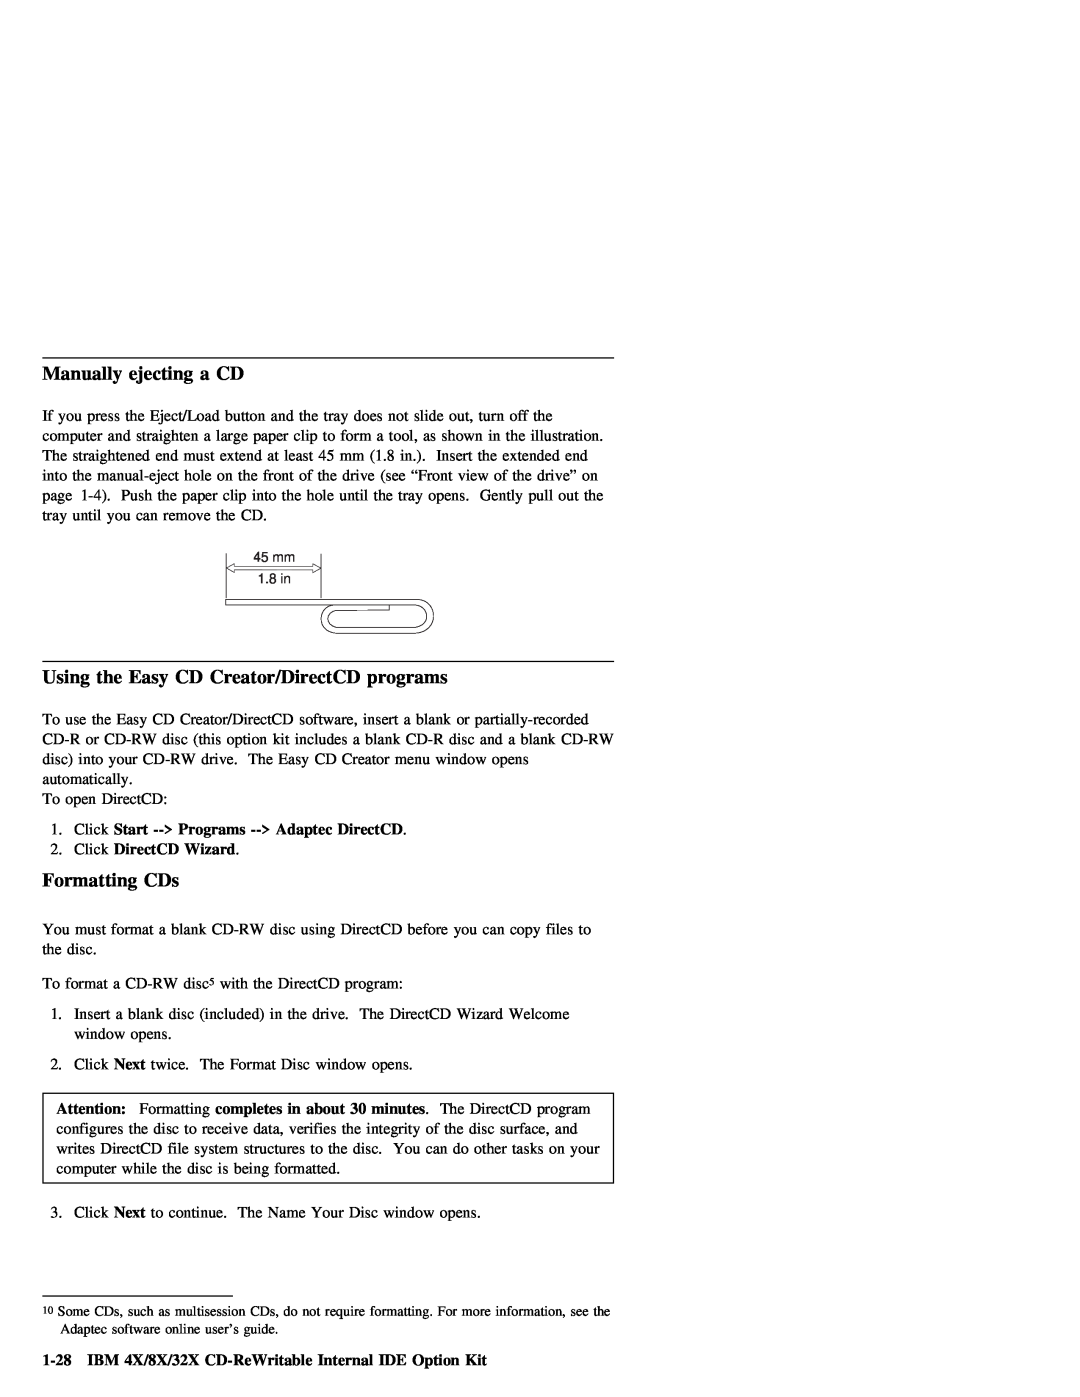 IBM 09N4076 manual IBM 4X/8X/32X CD-ReWritable Internal IDE Option Kit, ejecting, Easy, Start -- Programs 